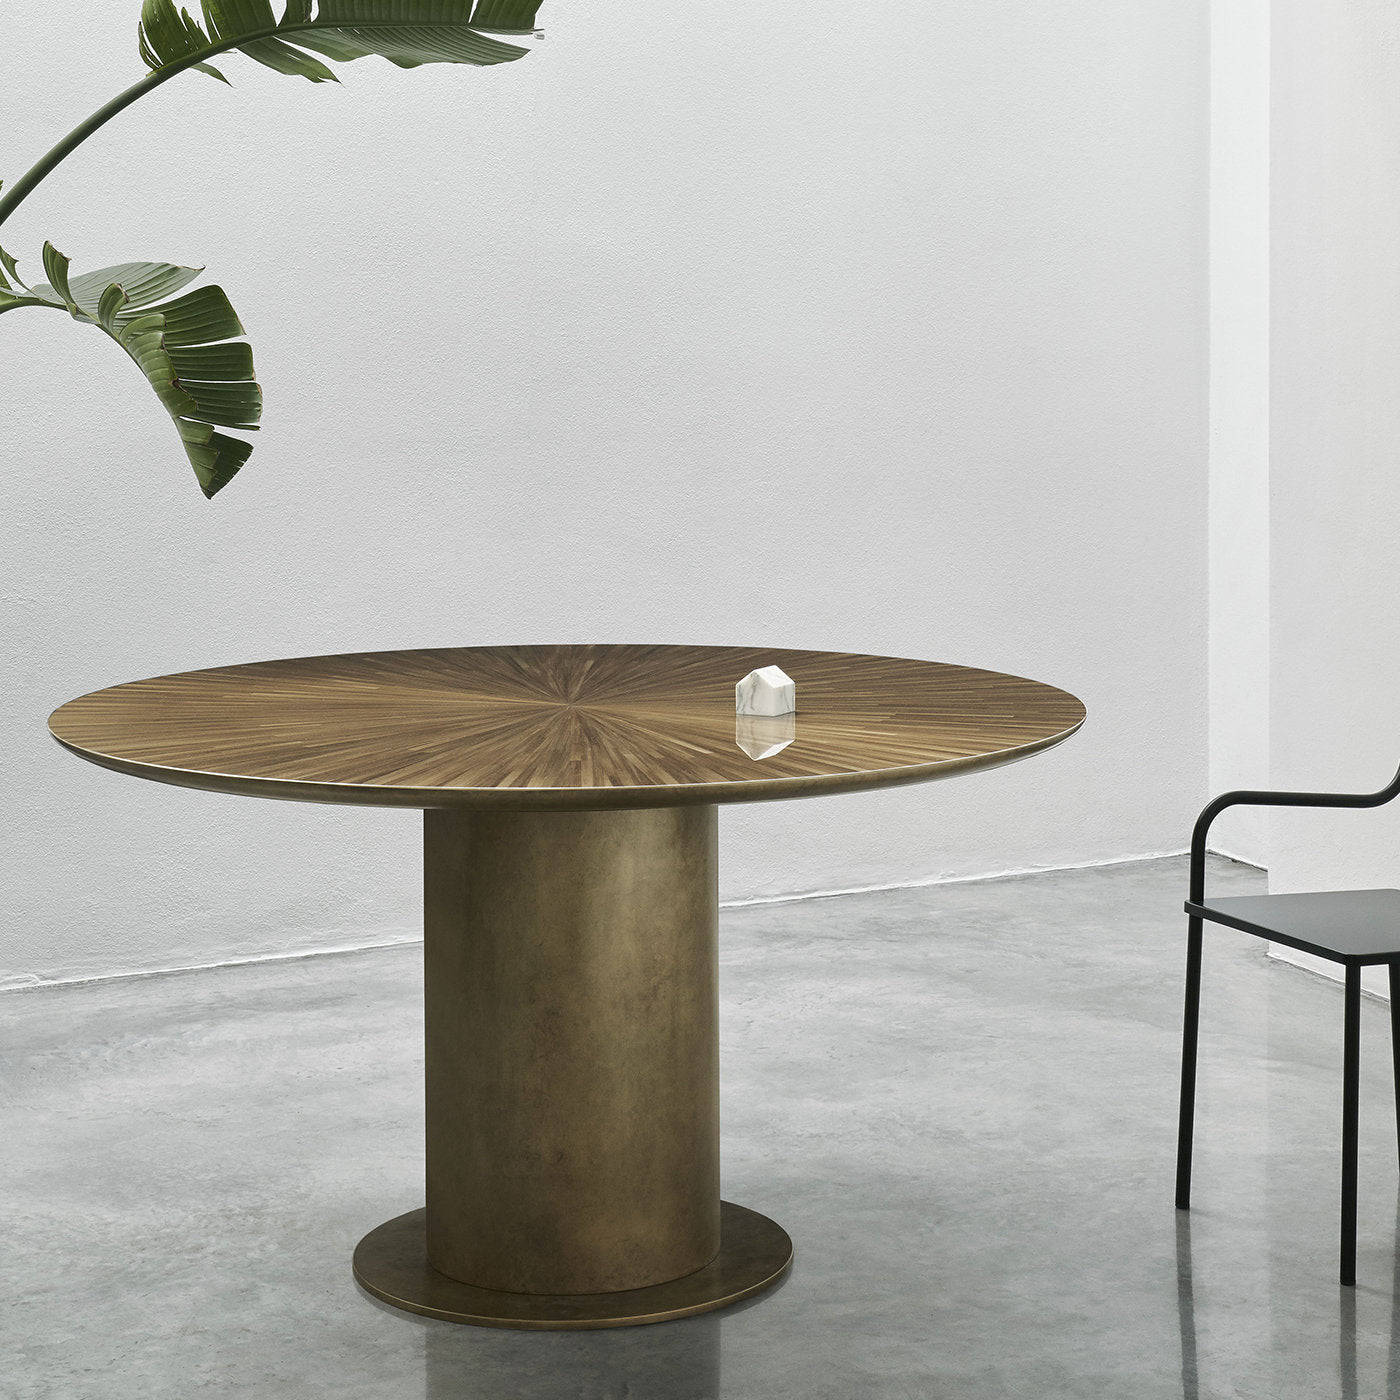 Radius Table by Antonio De Marco and Marco Sorrentino - Alternative view 3